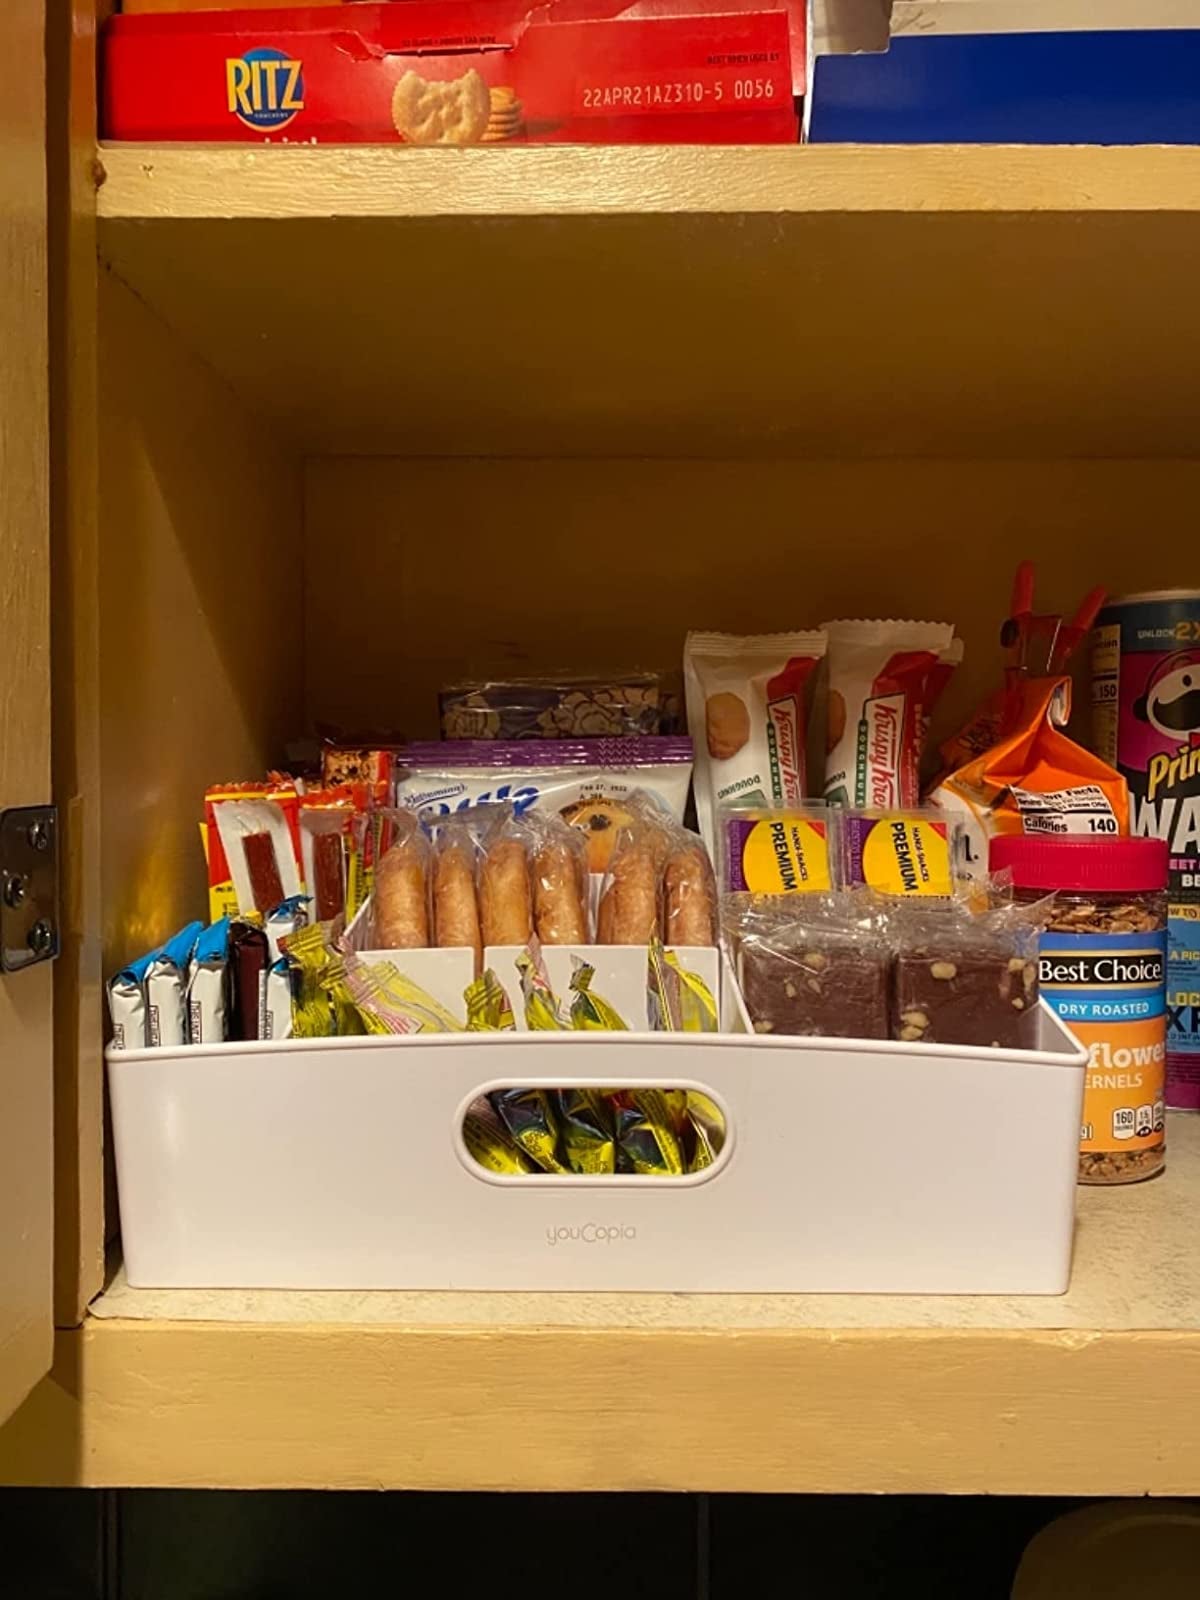 Snack Holder Kitchen Storage Idea - Savvy Saving Couple